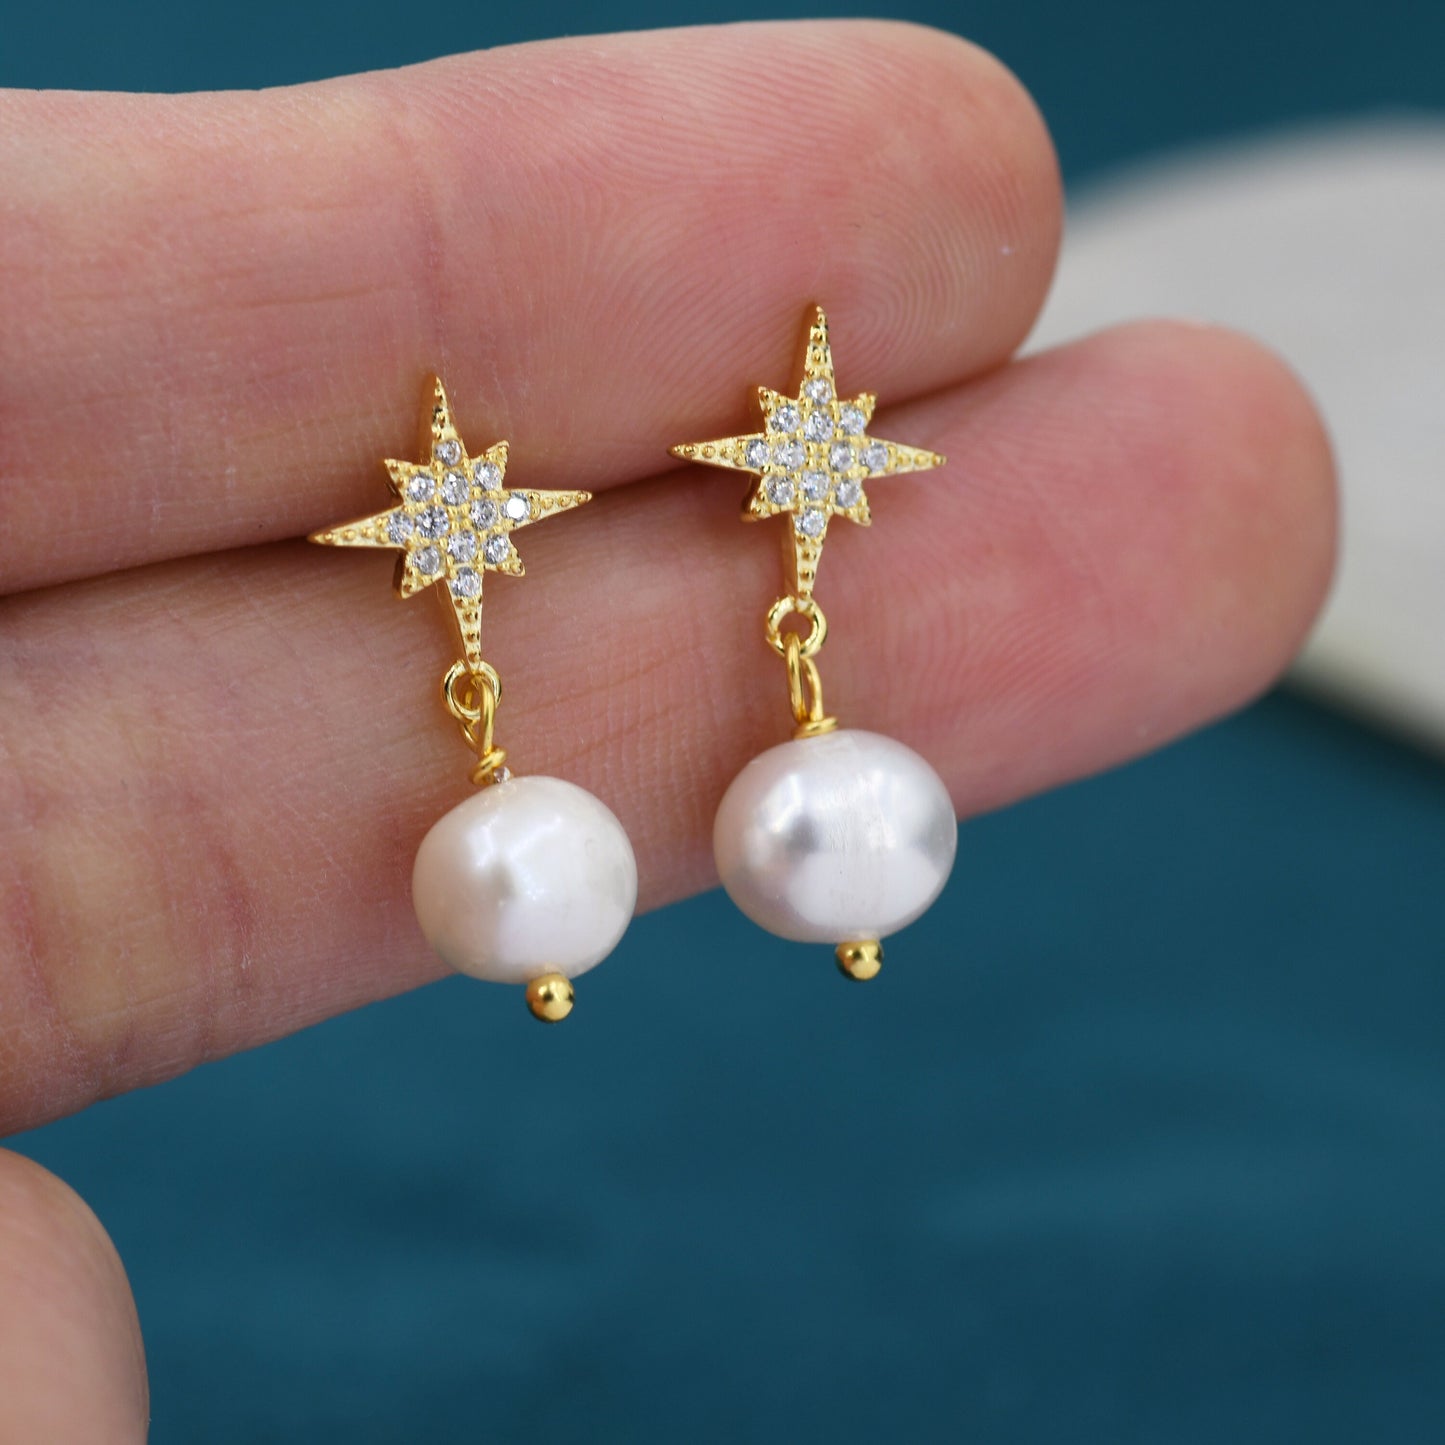 Starburst Star with Dangling Baroque Pearl Drop Earrings in Sterling Silver, Silver or Gold, Keshi Pearl Earrings,